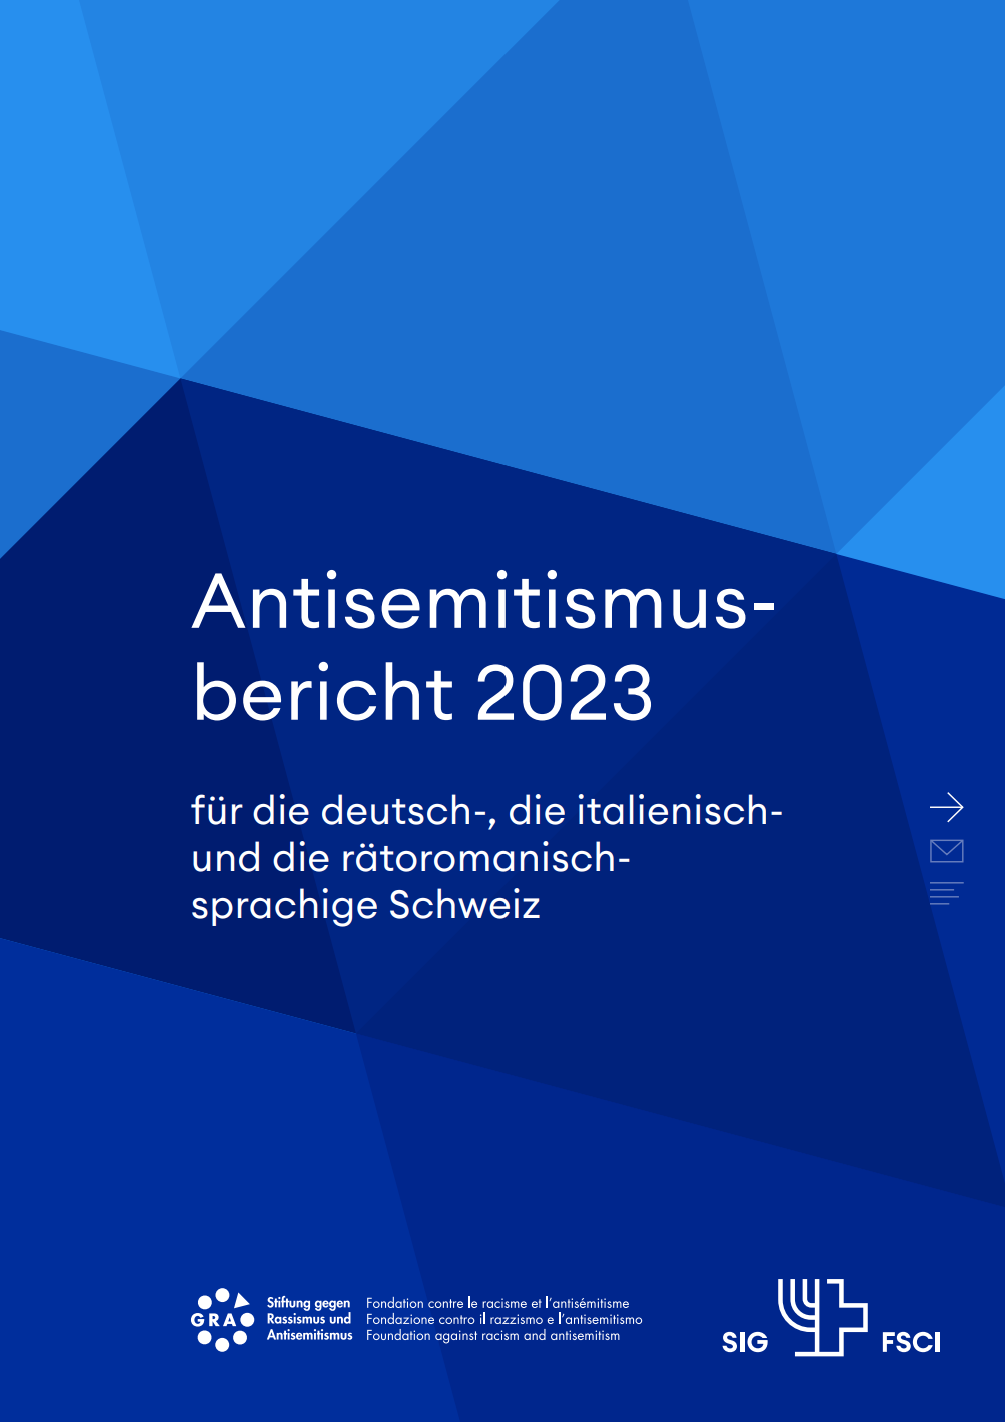 Antisemitismusbericht 2023